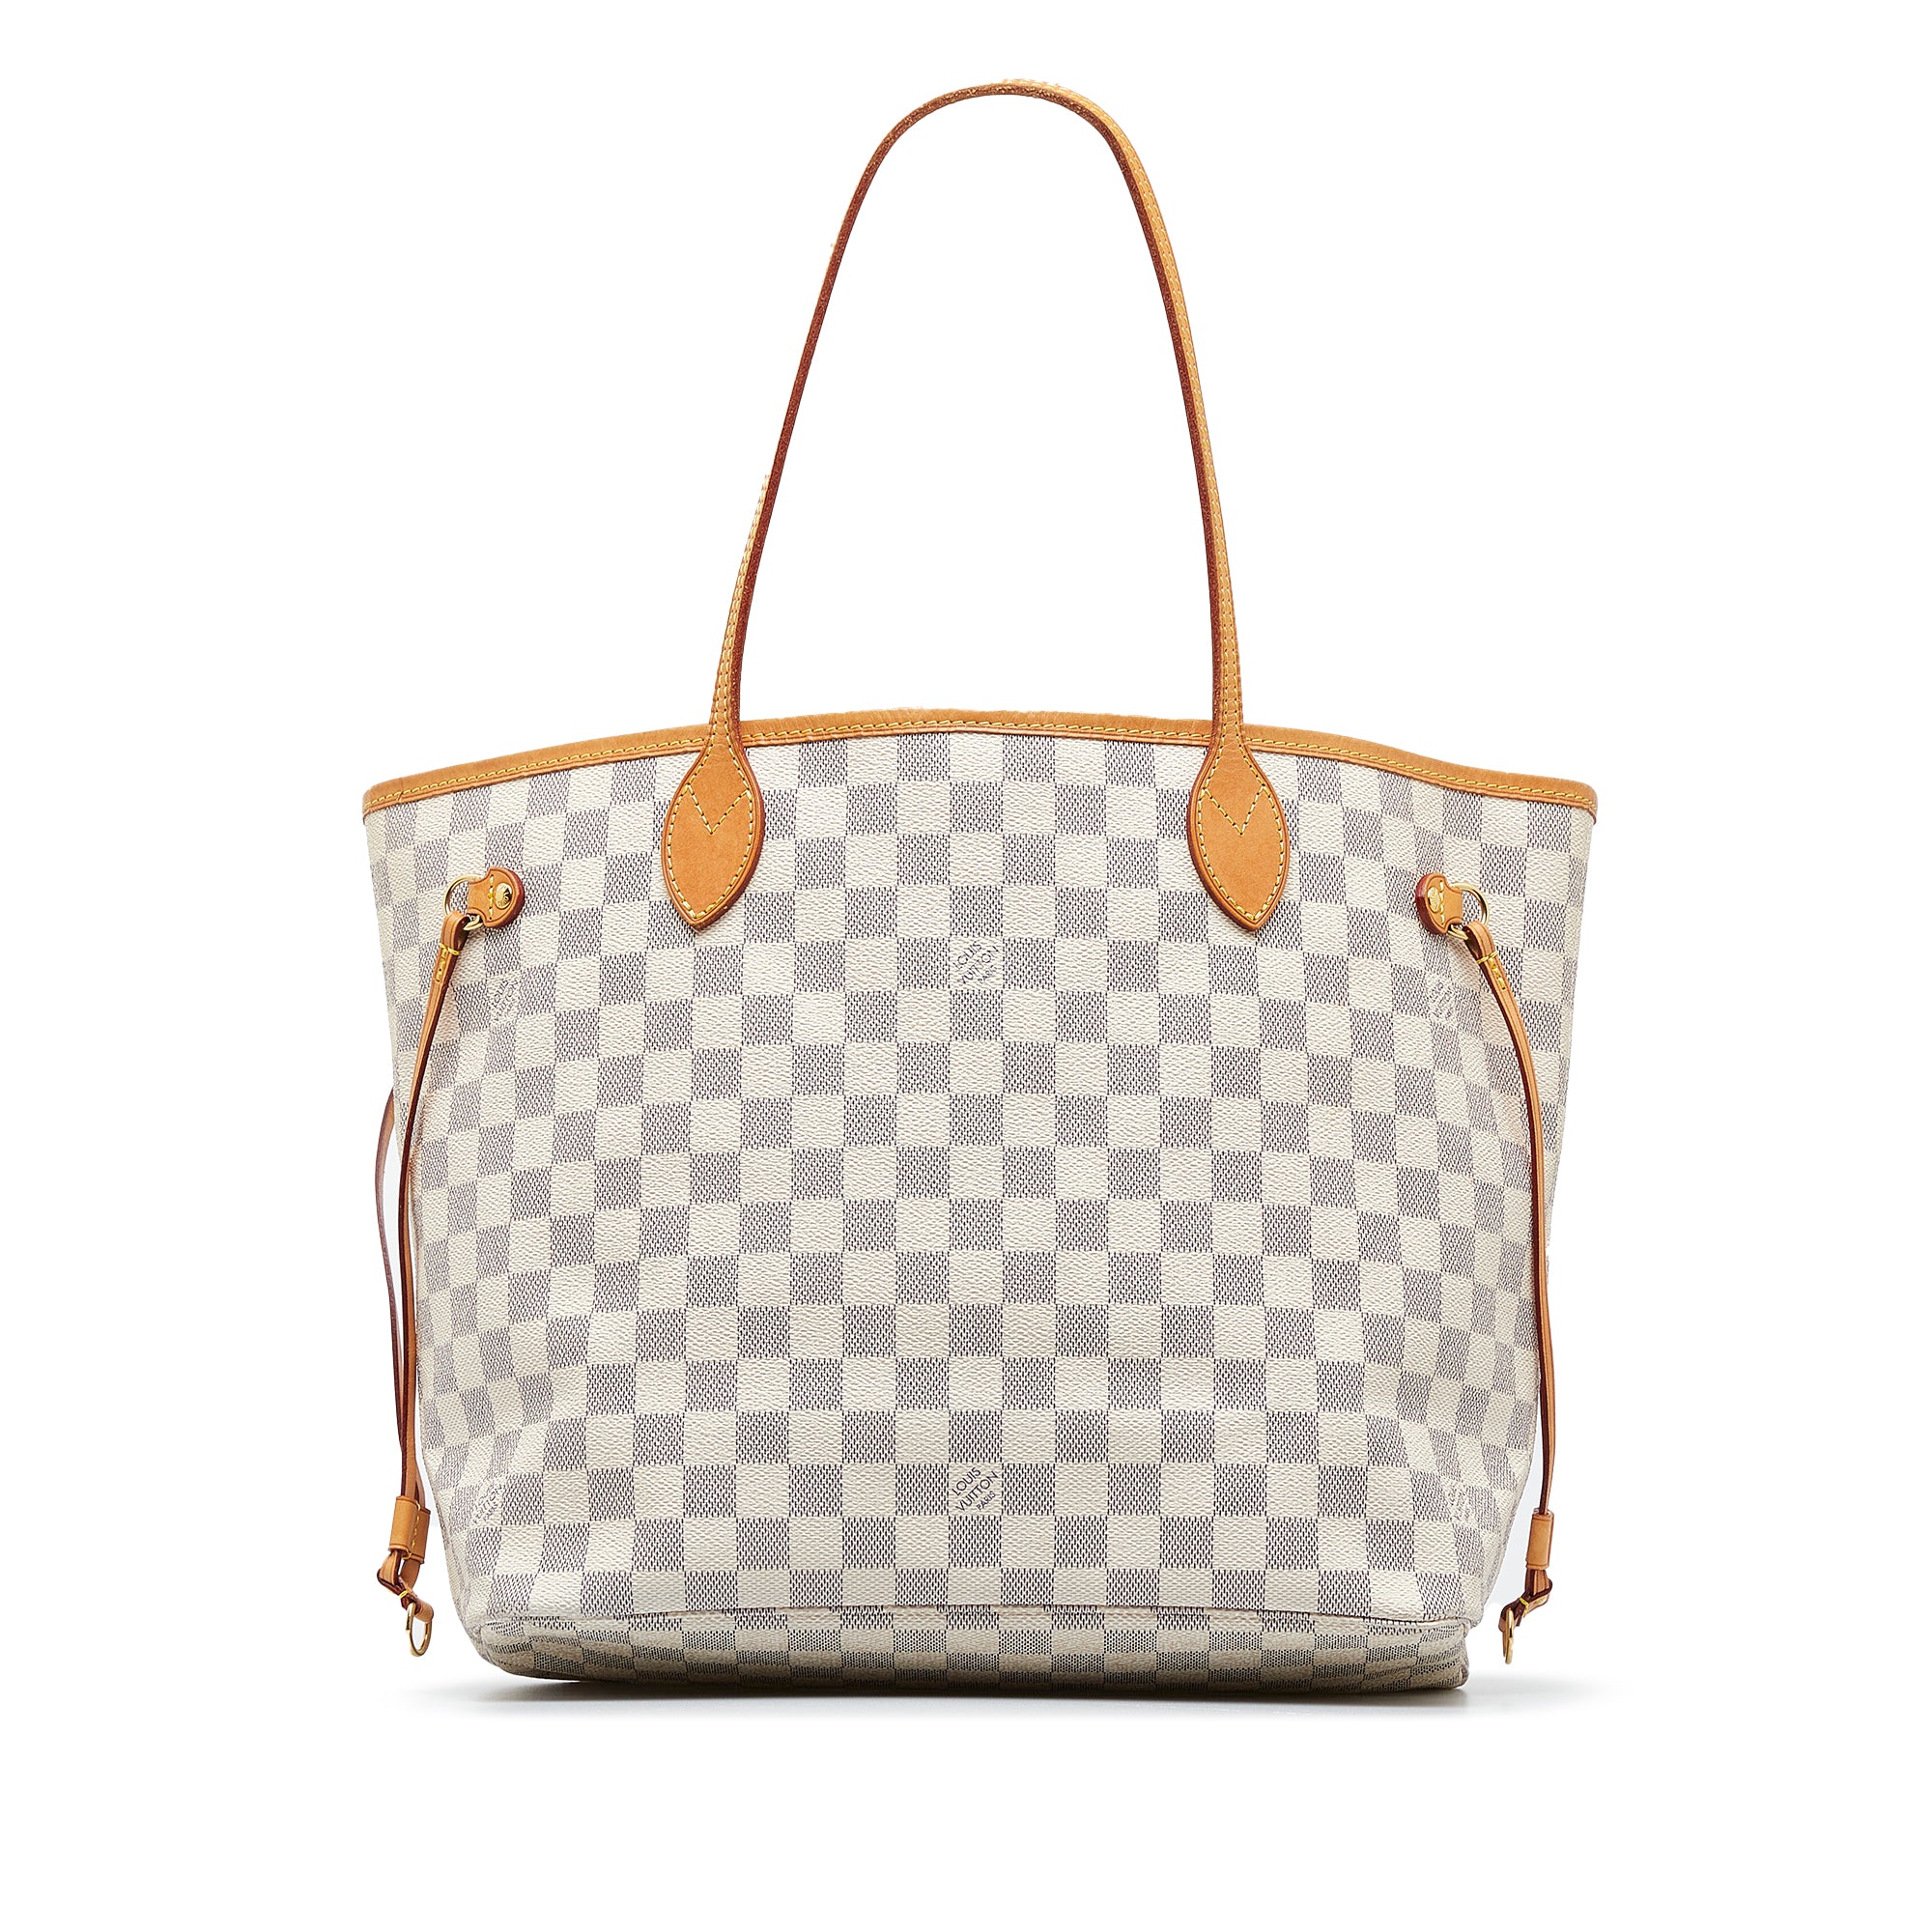 Louis Vuitton - Authenticated Neverfull Handbag - Cotton White for Women, Good Condition